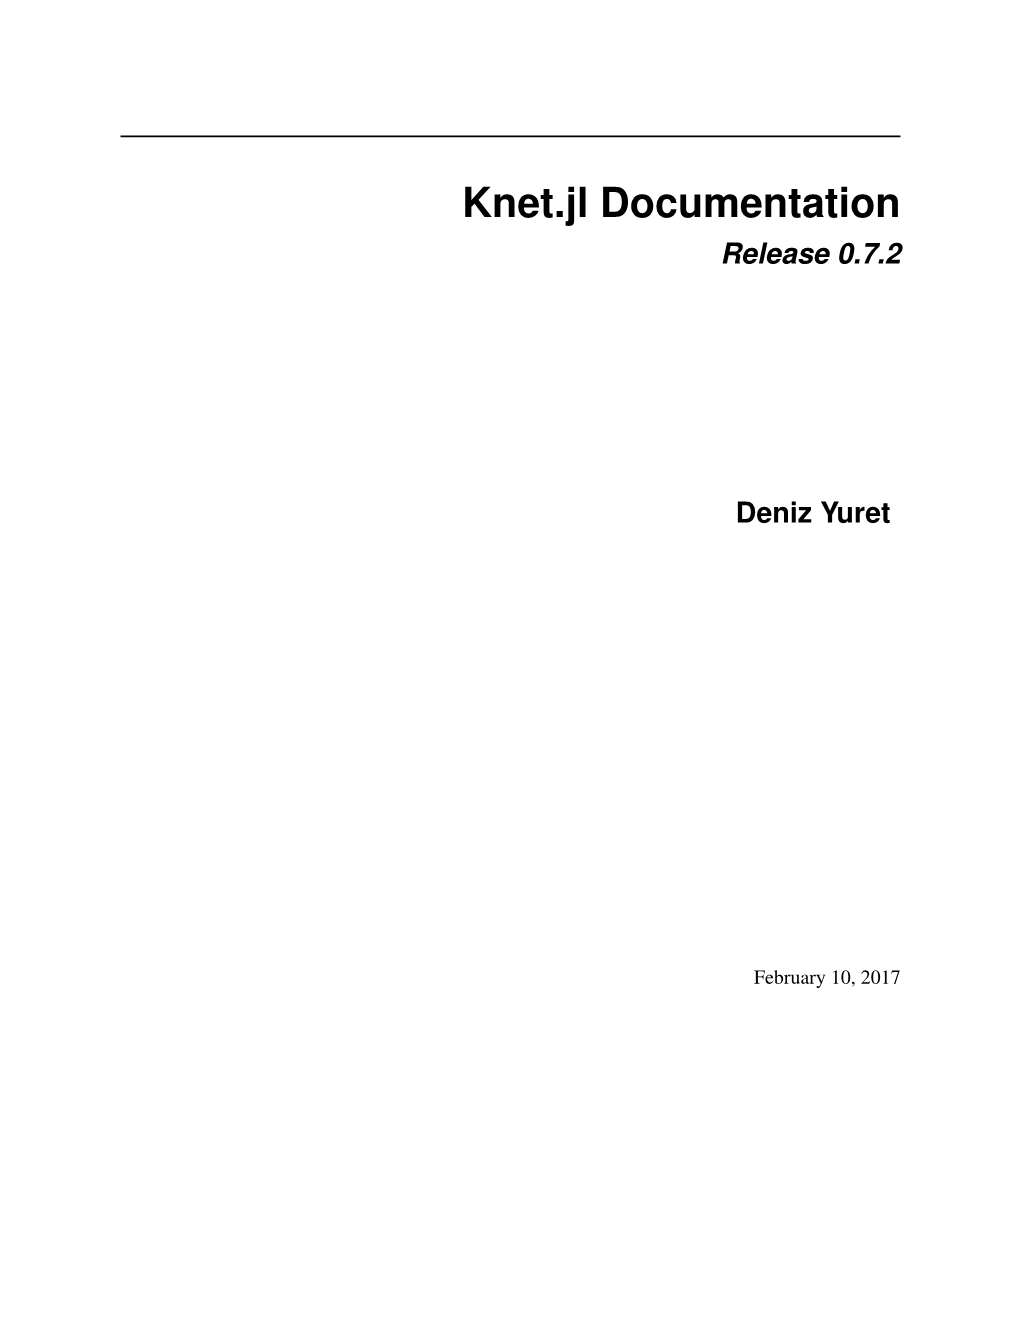 Knet.Jl Documentation Release 0.7.2